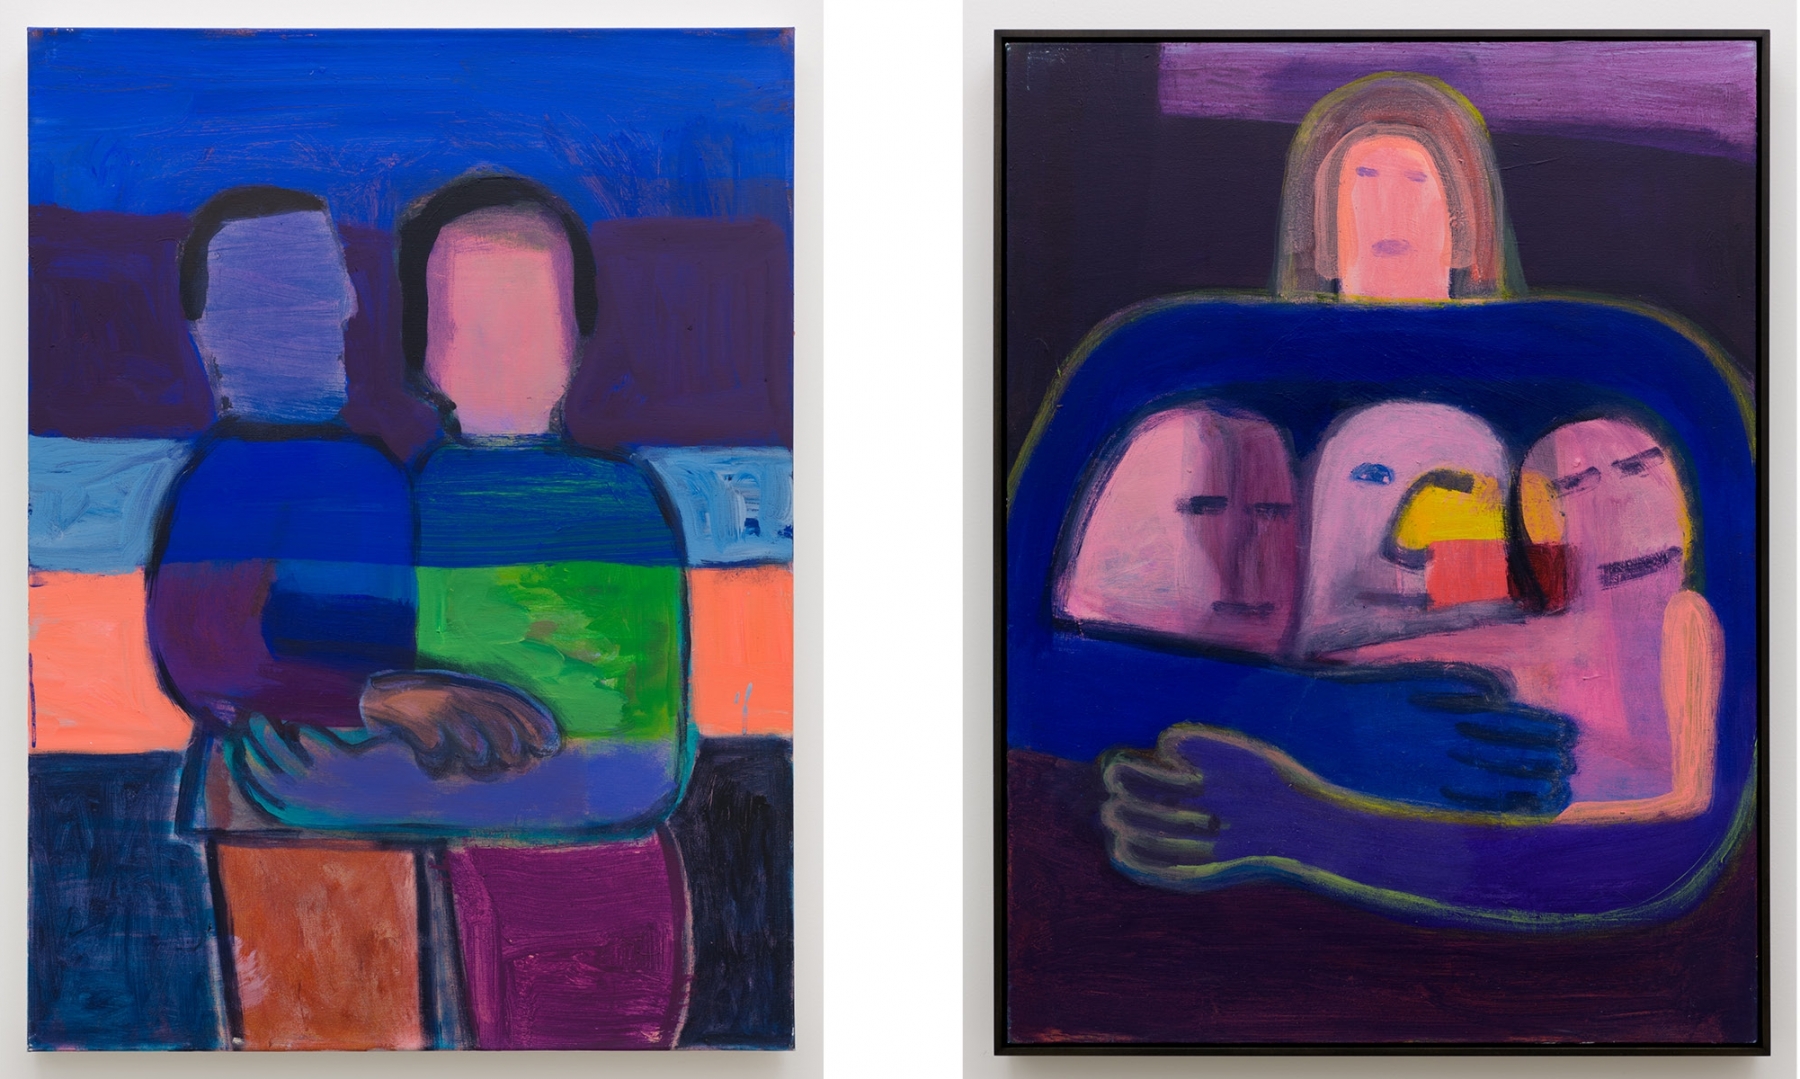 Left:&nbsp;Katherine Bradford,&nbsp;Close Friends, 2021;&nbsp;acrylic on canvas,&nbsp;40h x 30w in/&nbsp;101.60h x 76.20w cm

Right:&nbsp;Katherine Bradford,&nbsp;Family Embrace, 2021;&nbsp;acrylic on canvas,&nbsp;40h x 30w in/&nbsp;101.60h x 76.20w cm

Inquire